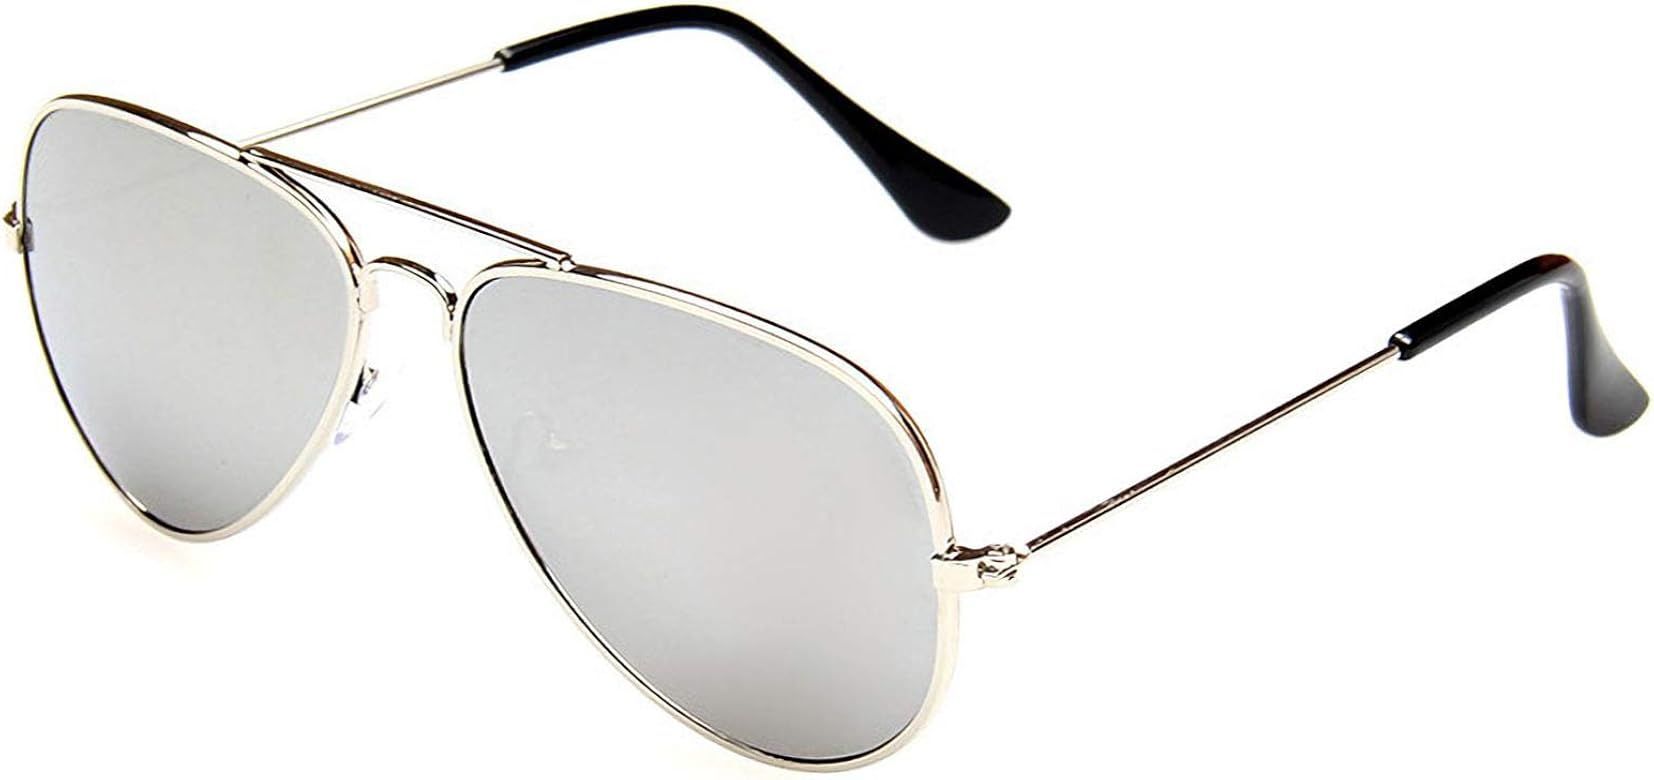 WODISON Classic Kids Aviator Sunglasses for Boys Girls Children sunglasses Reflective Metal Frame | Amazon (US)